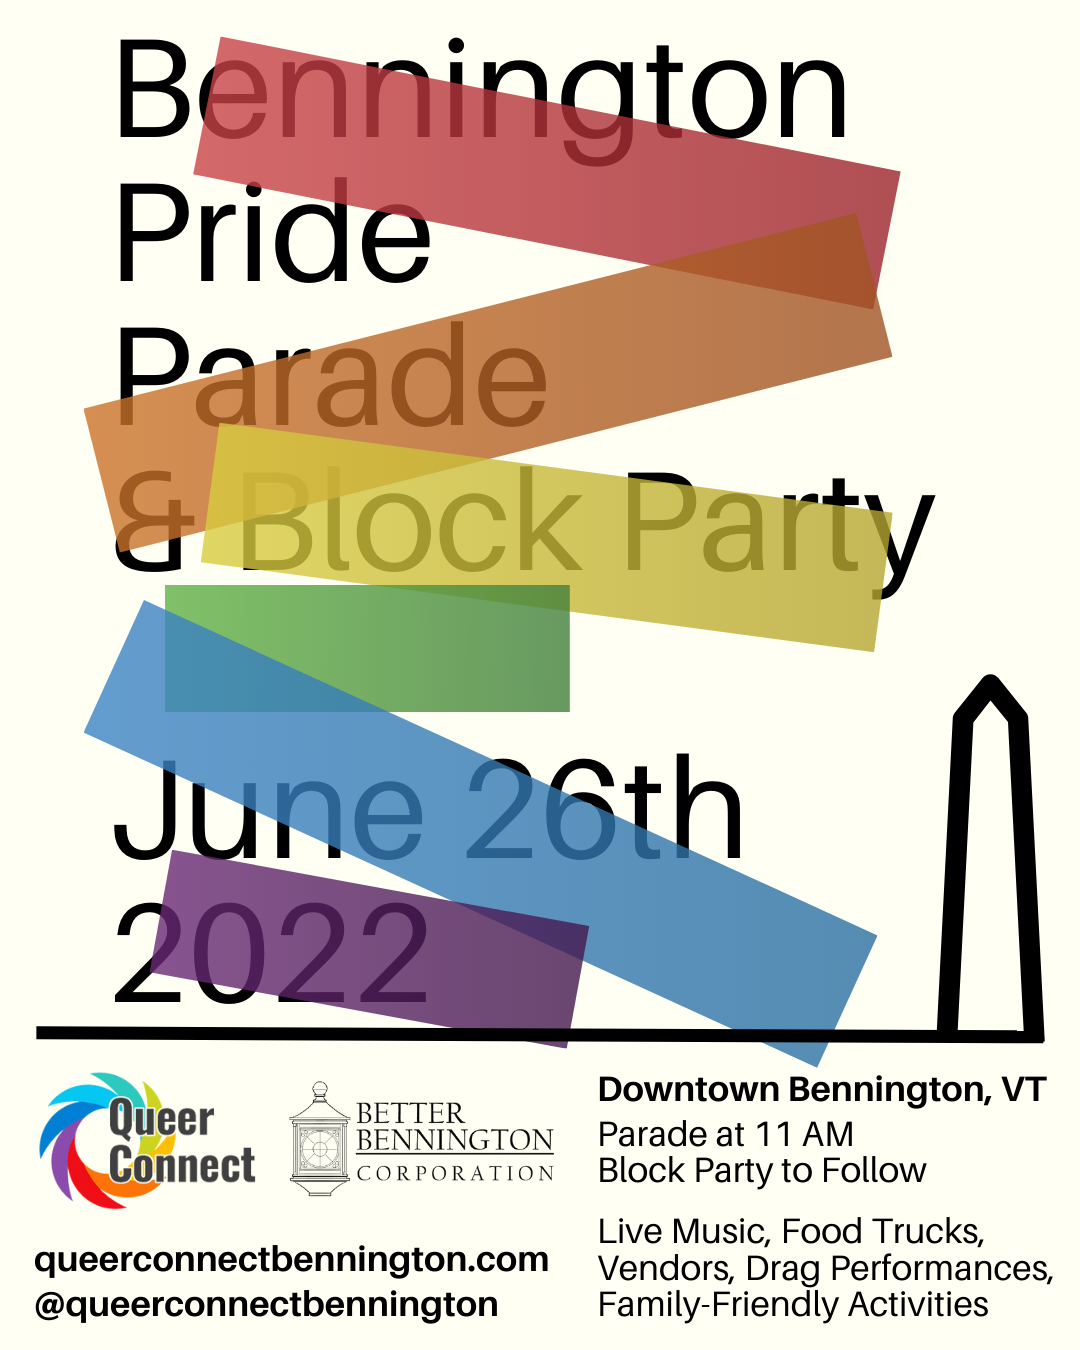 Bennington Pride Parade & Block Party June 26, 2022: downtown Bennington, VT, parade at 11 AM, block party to follow. Live music, food trucks, vendors, drag performances, family-friendly activities.